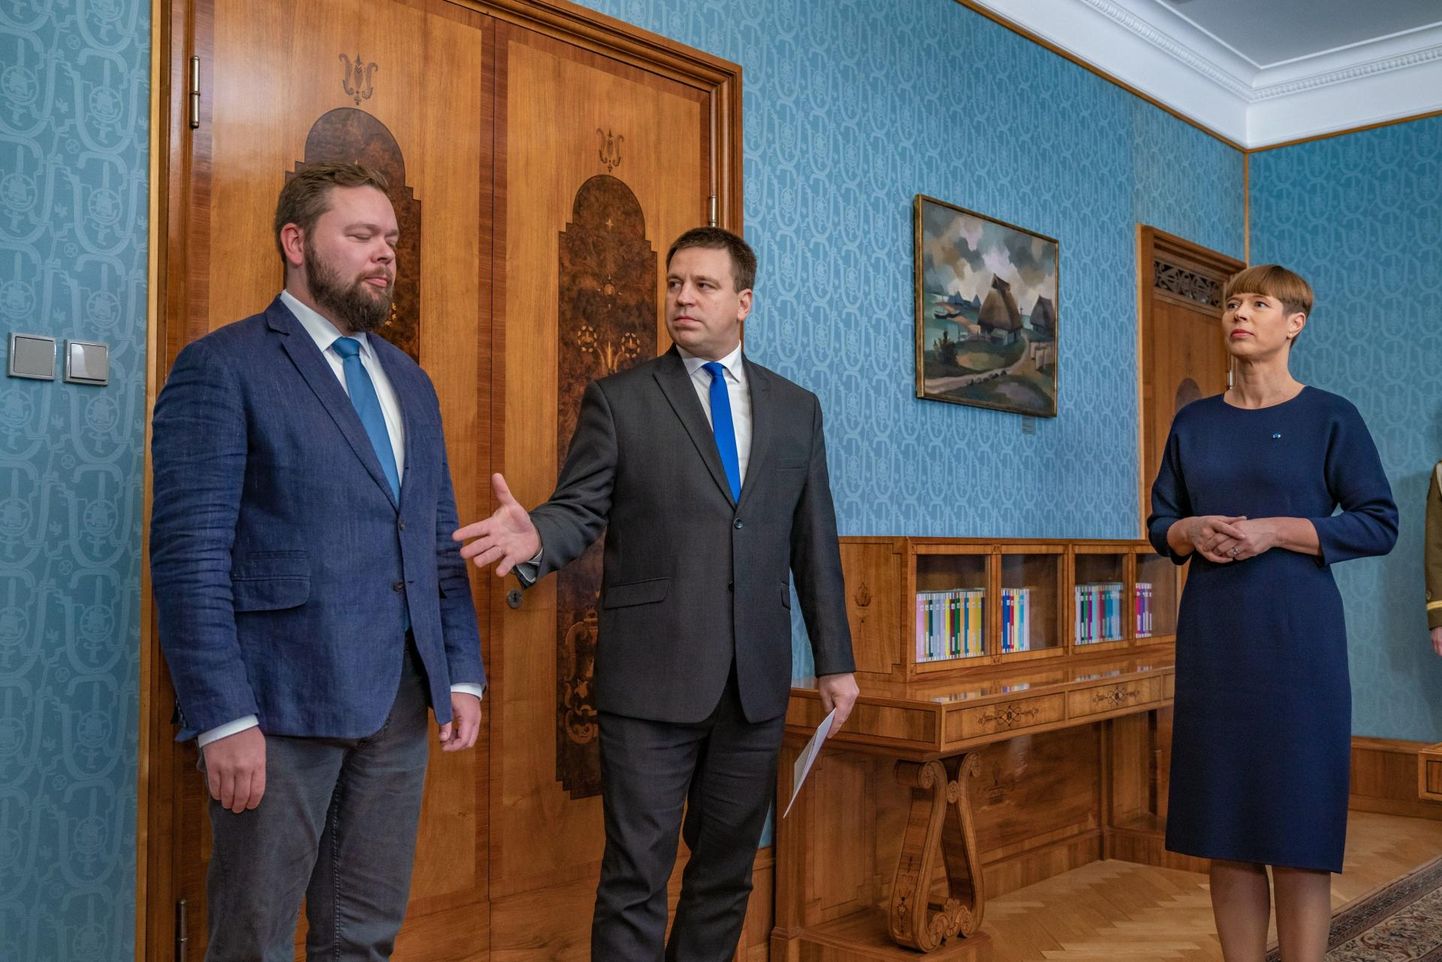 Kaimar Karu ministriks nimetamine Kadriorus 2. novembril 2019